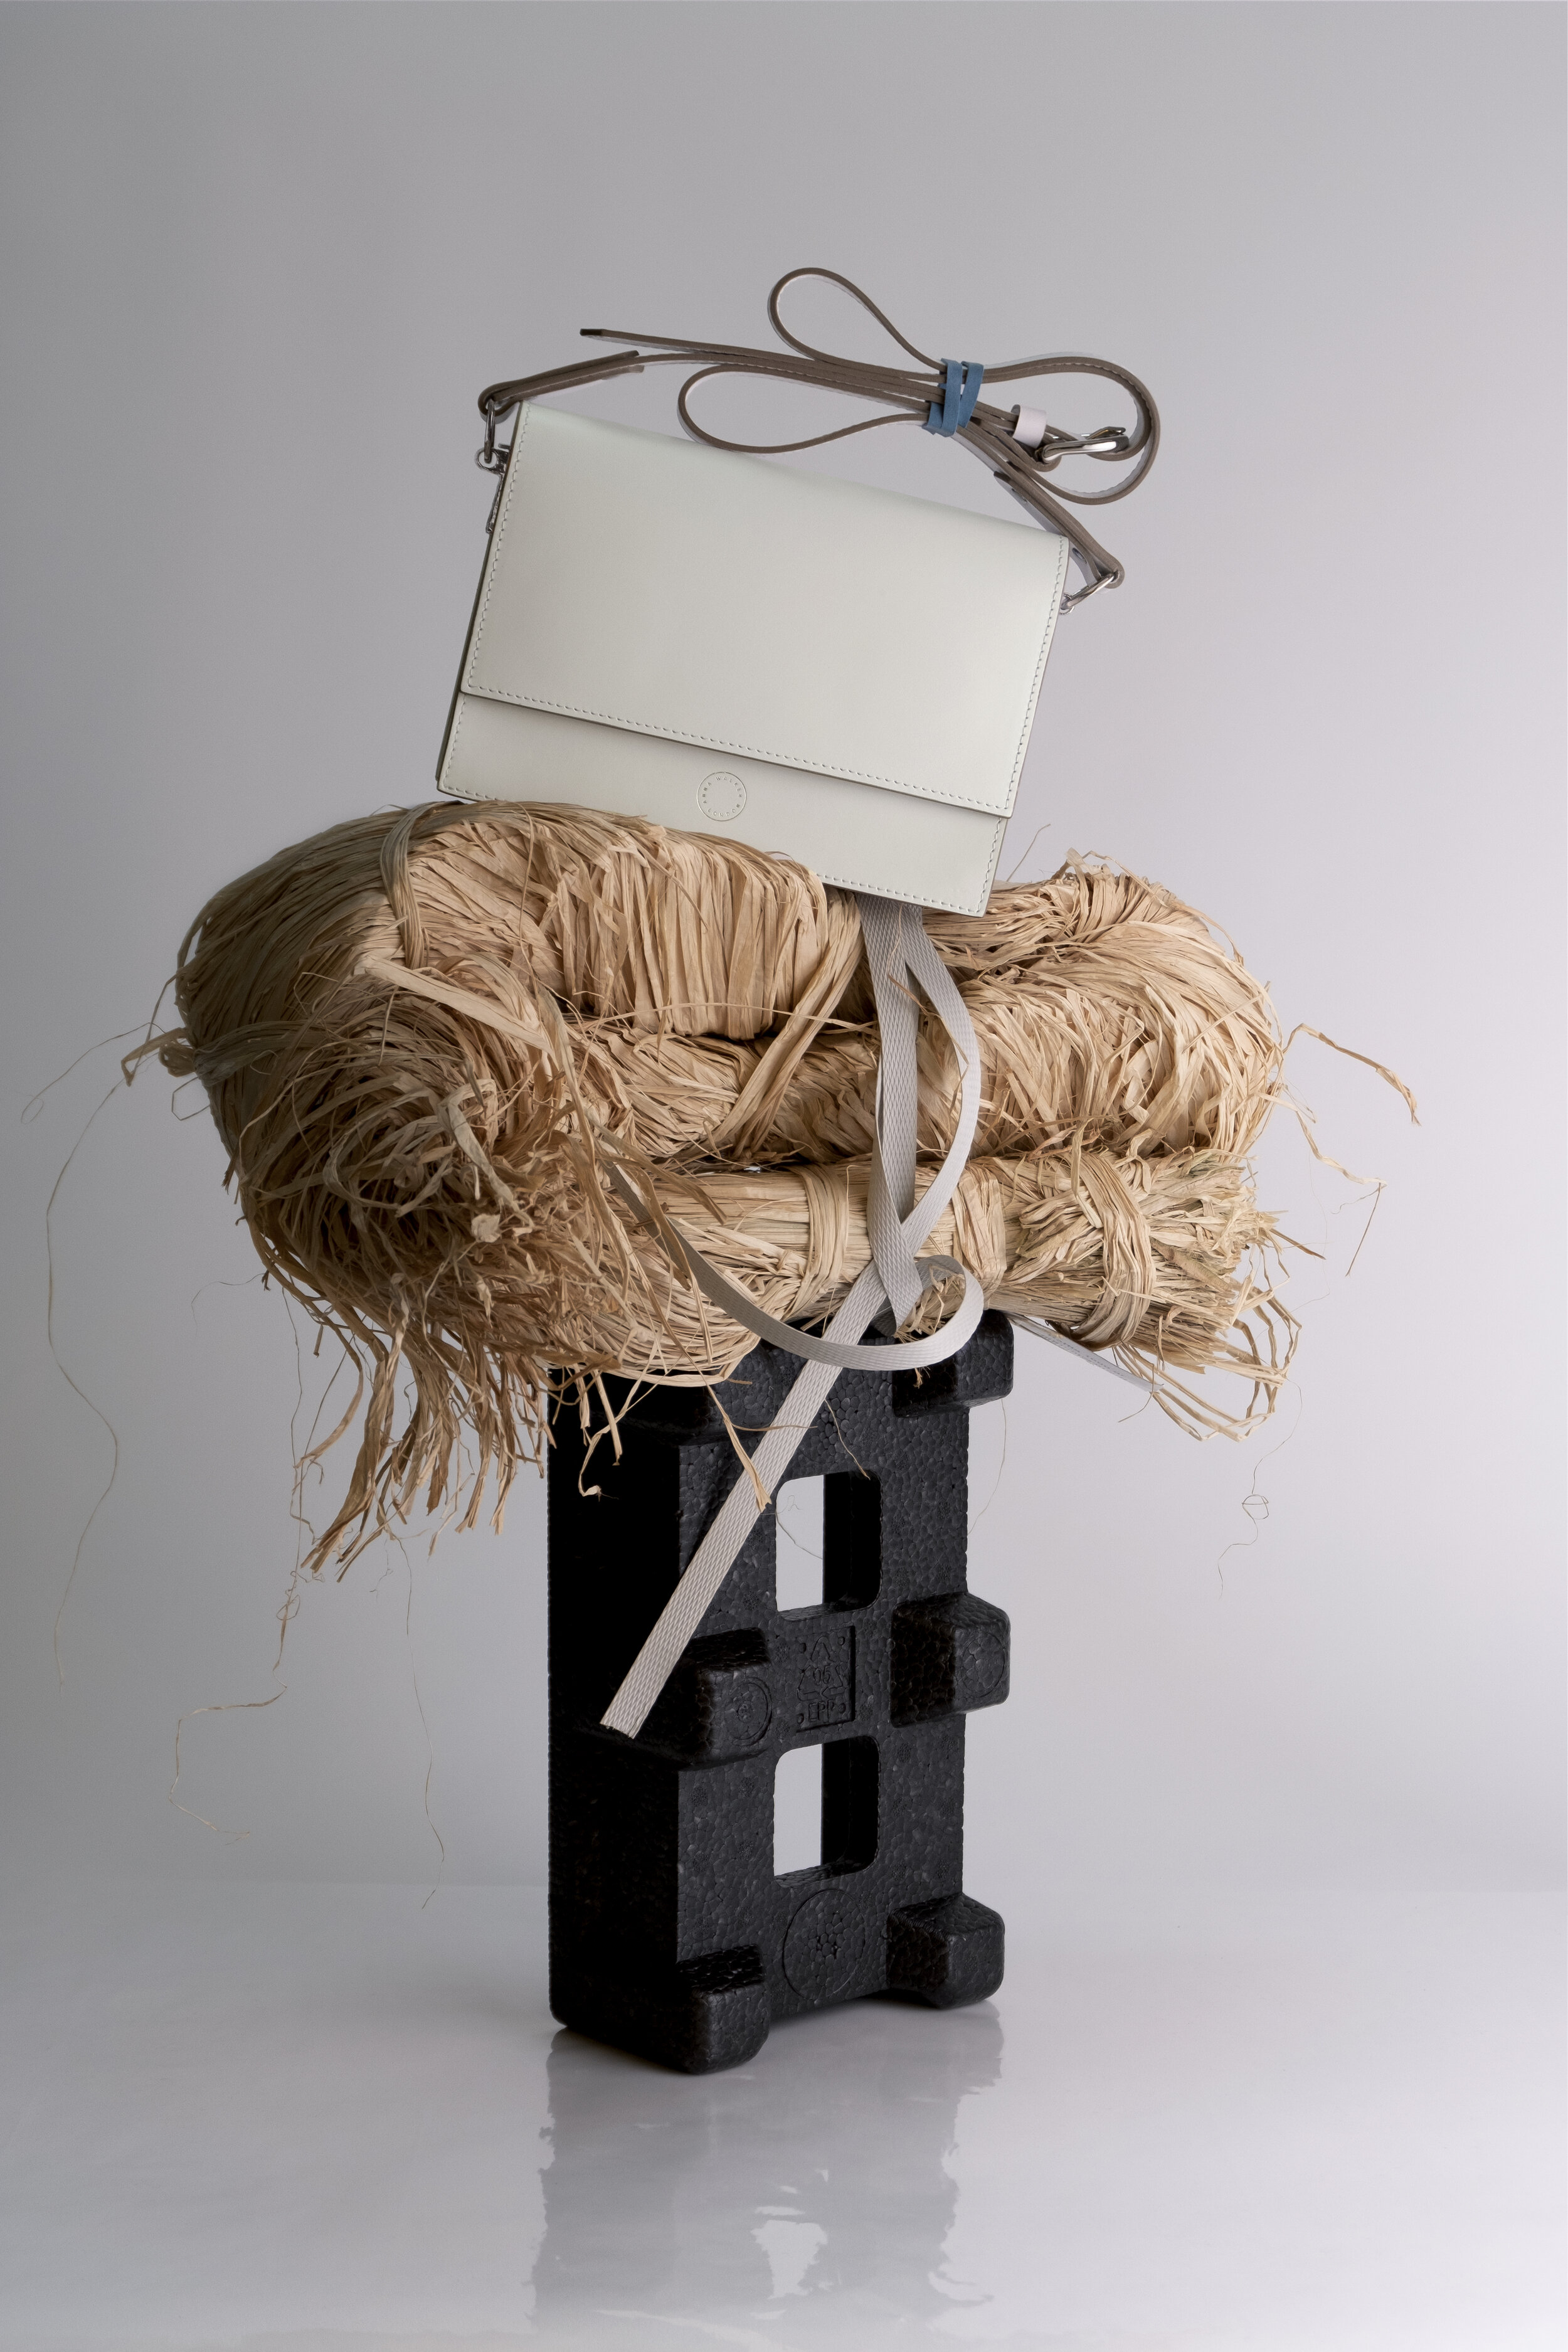 albertine-tucknott-stylist-still-life-leather-bag-white-sculpture.jpg